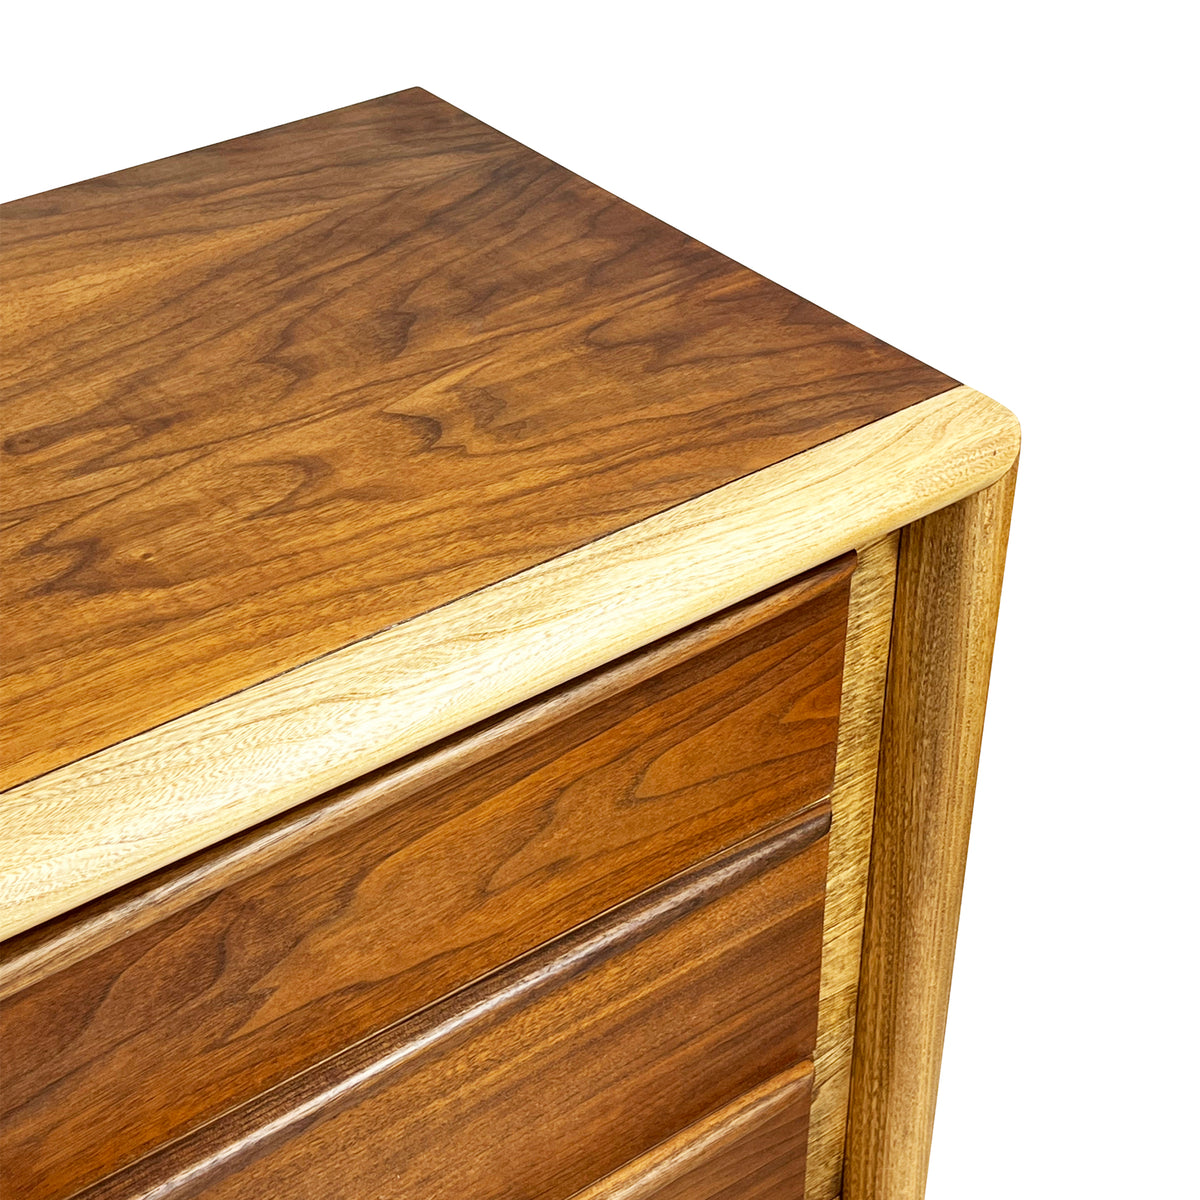 Walnut Dresser by United Furniture